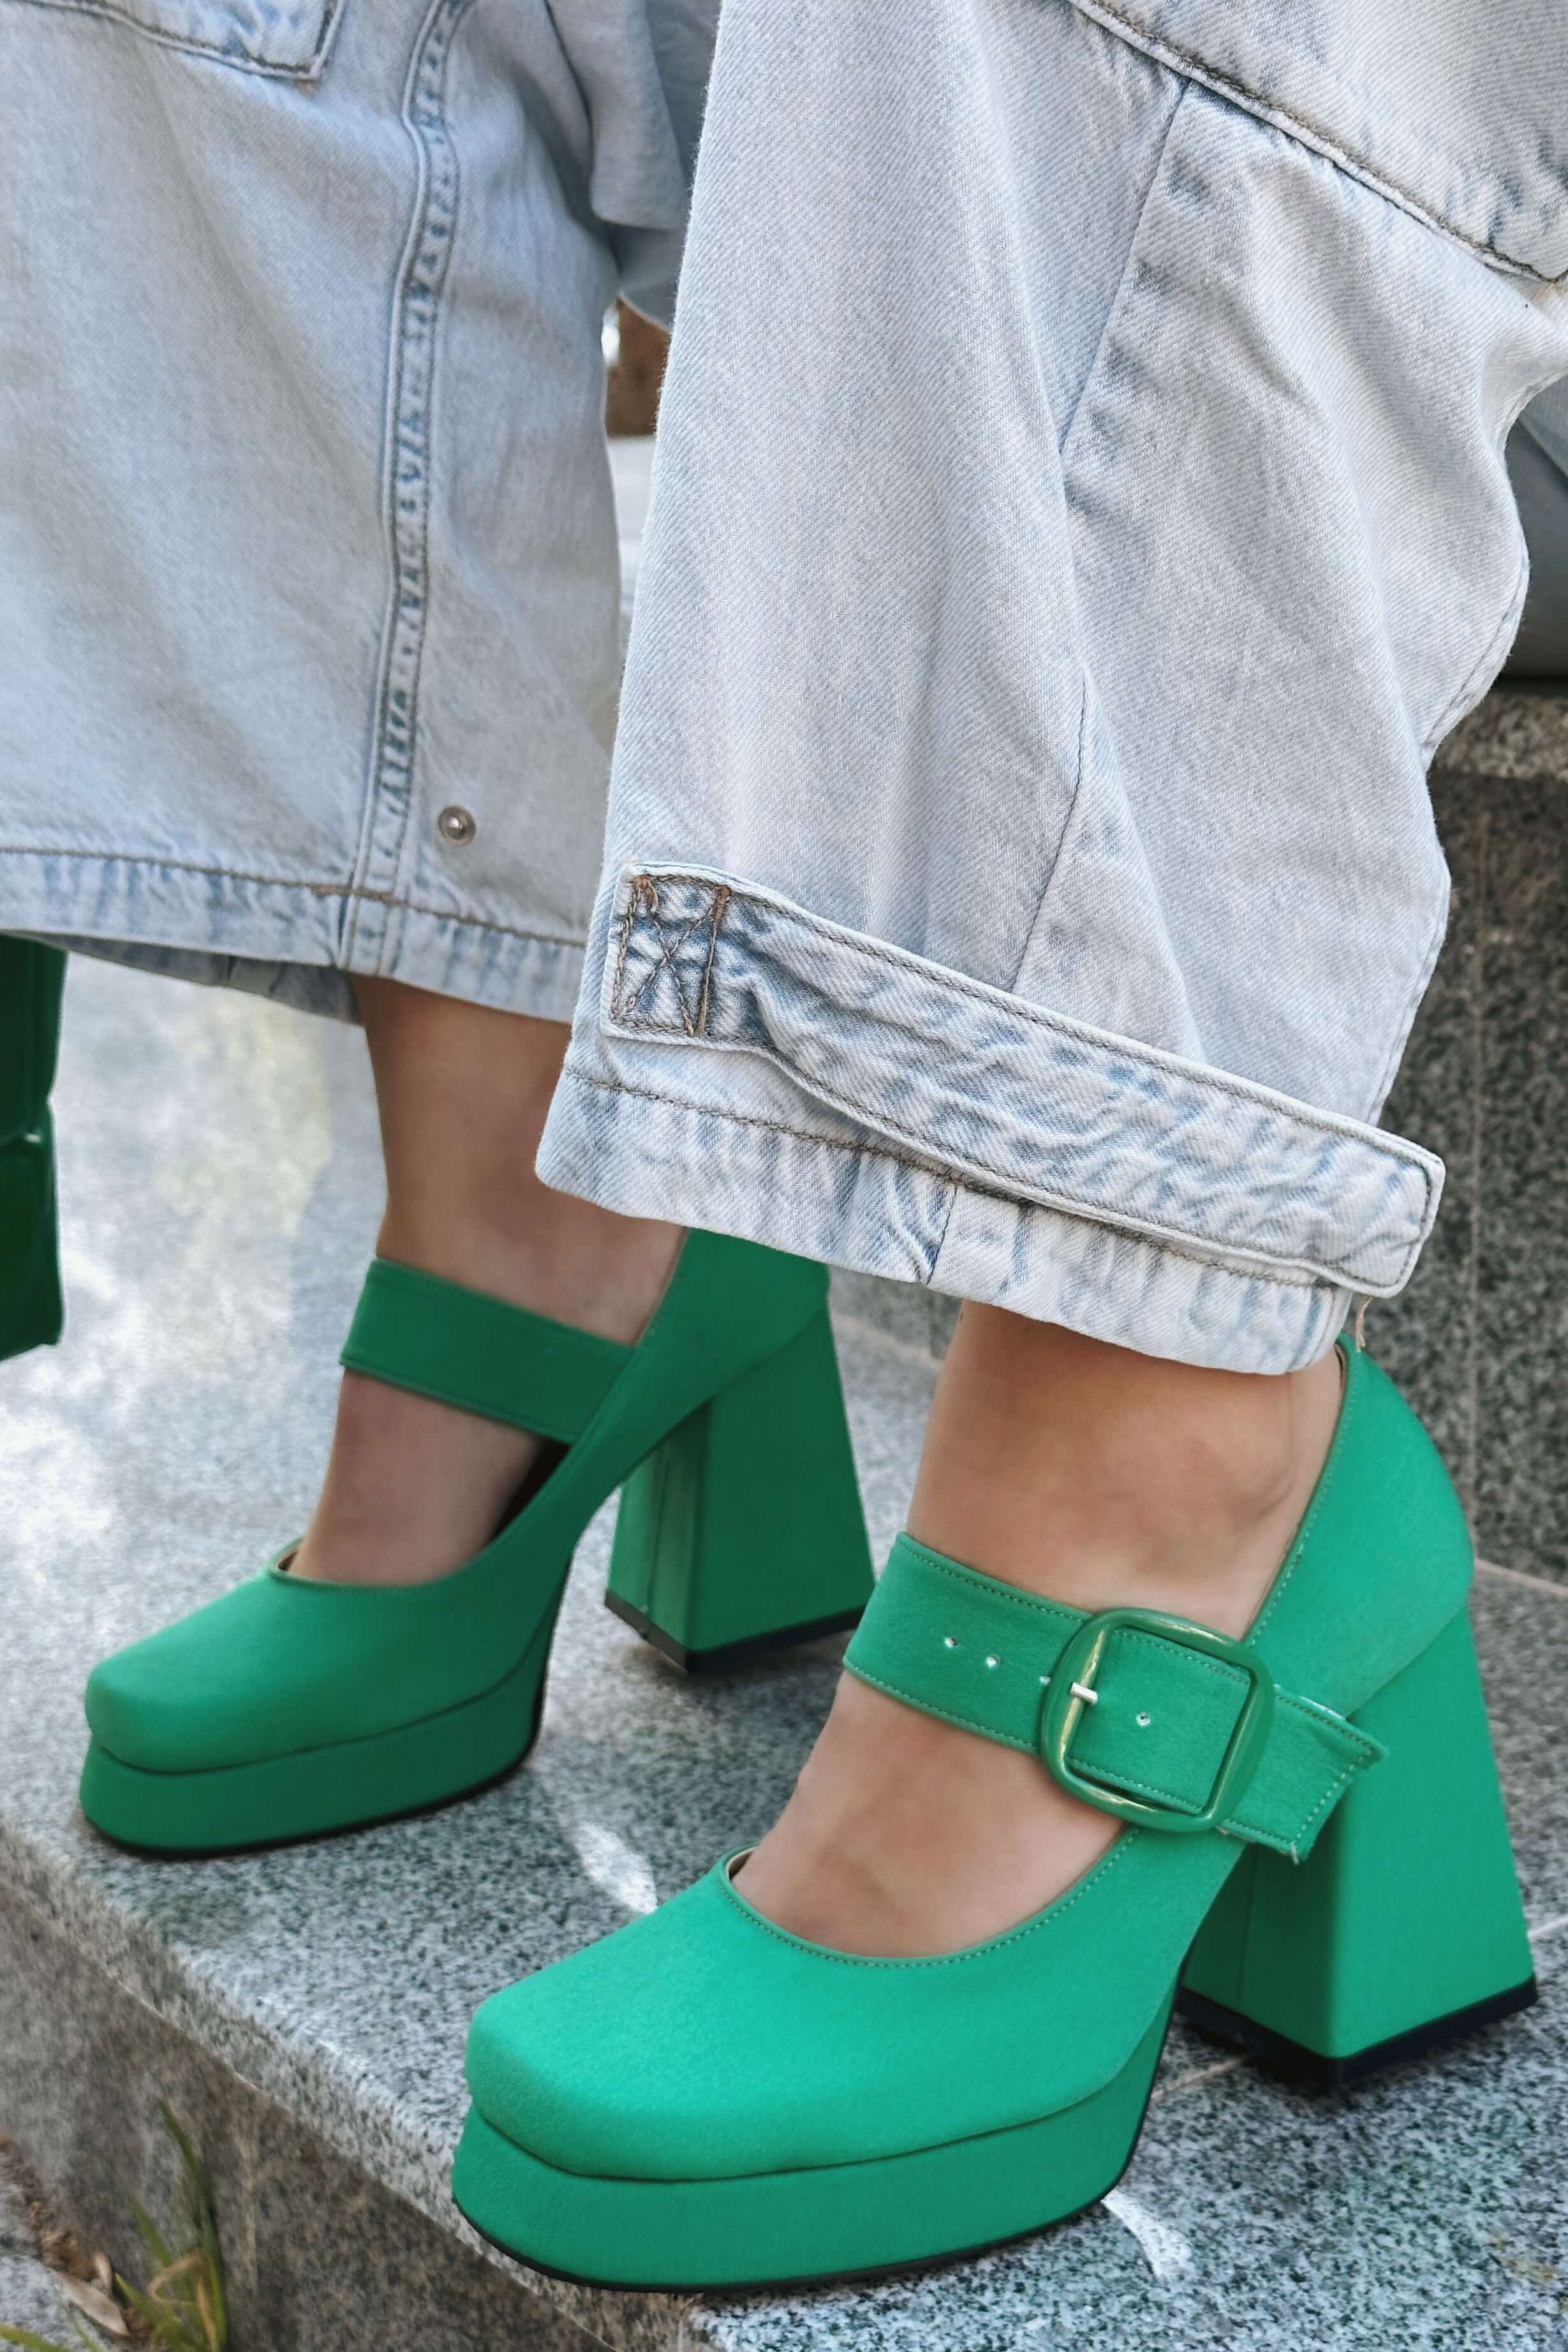 Alpons Satin Woman Platform Heels Shoes Green